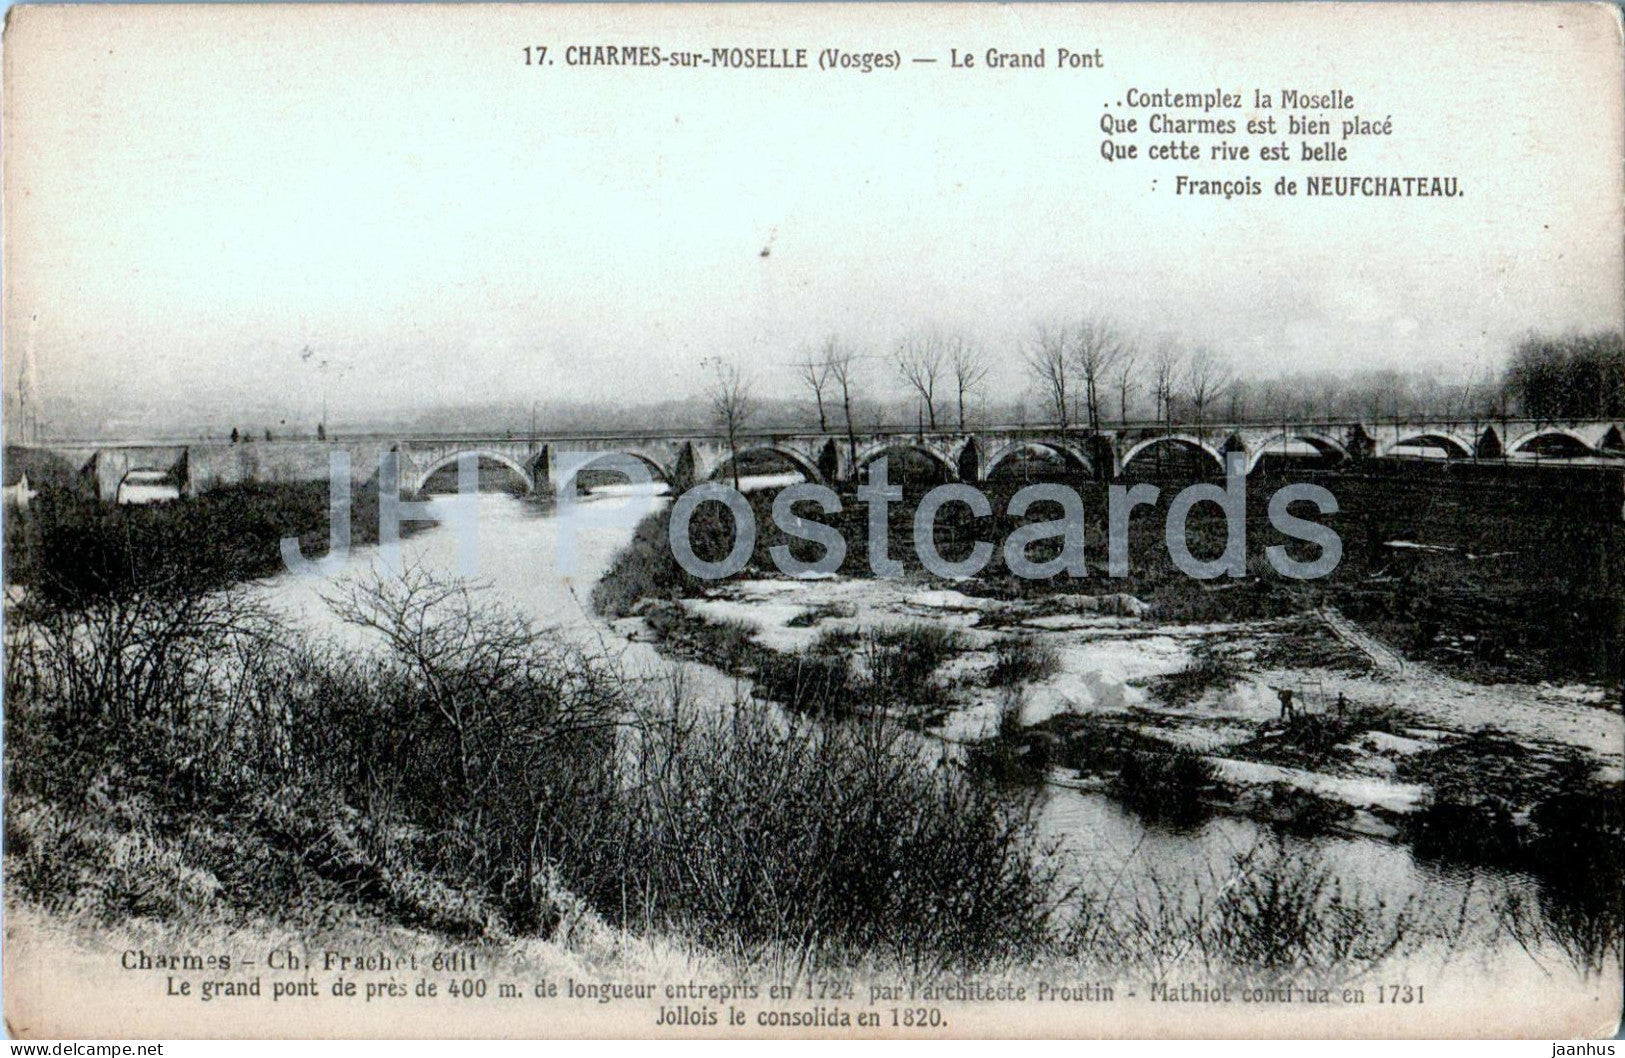 Charmes sur Moselle - Le Grand Pont - bridge - 17 - old postcard - 1915 - France - used - JH Postcards